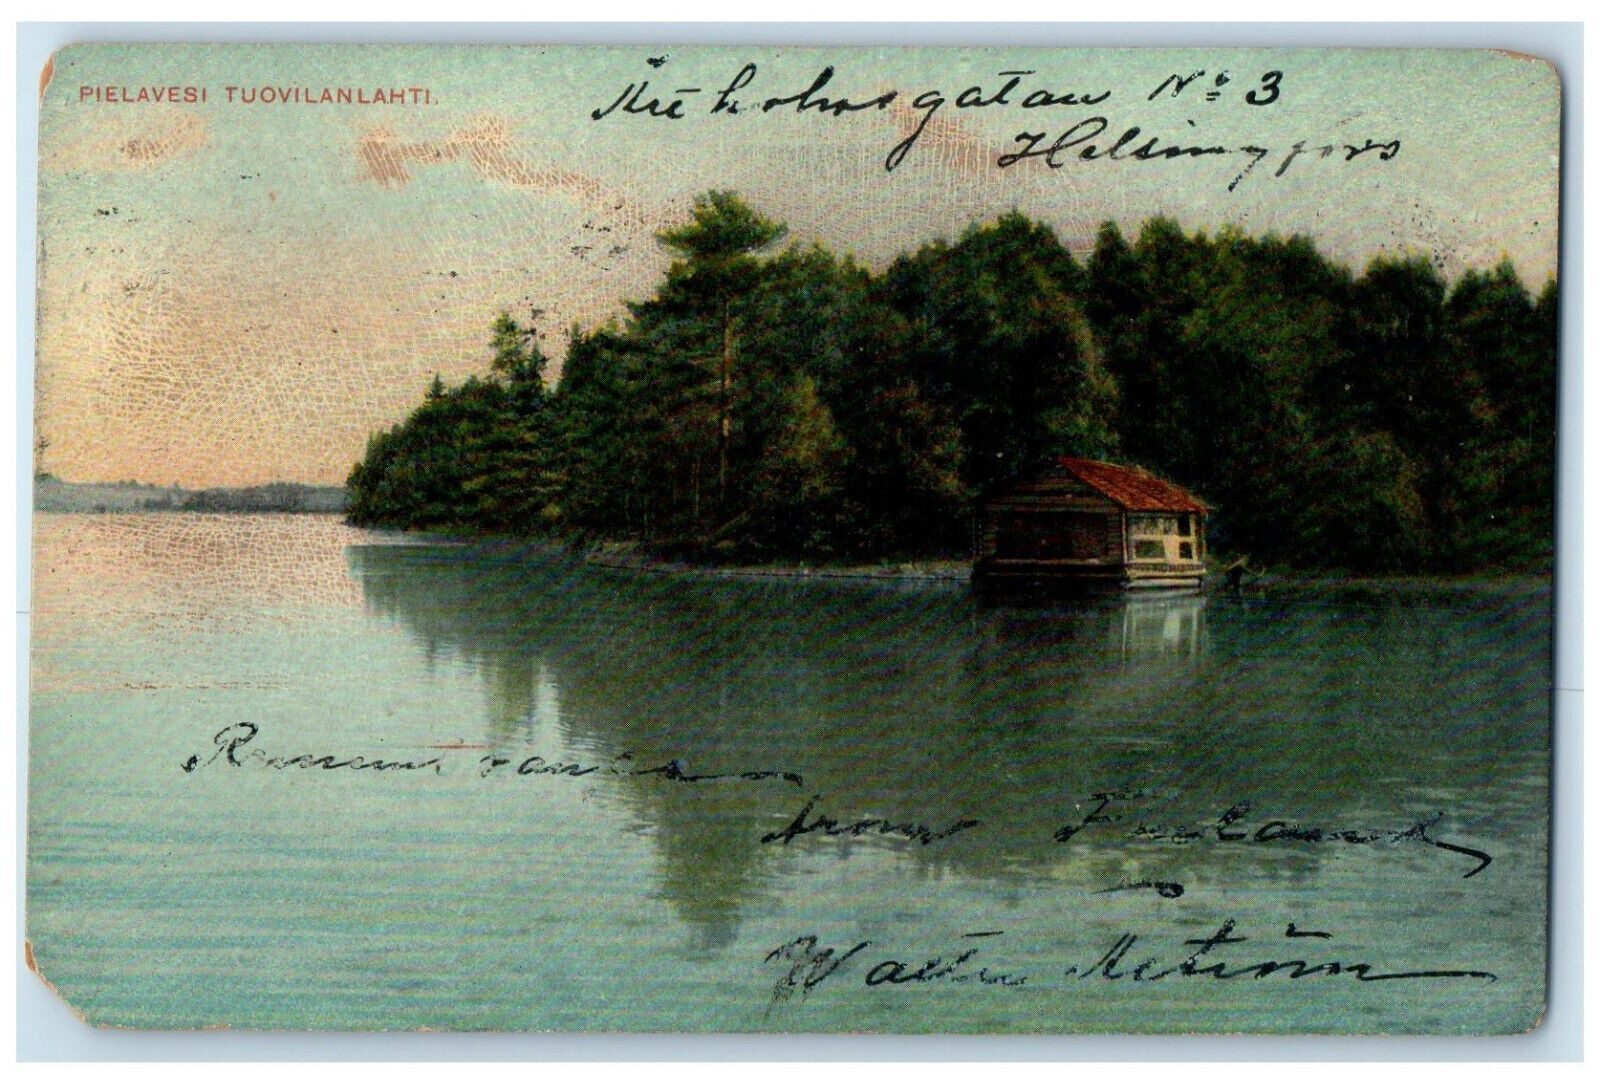 1908 Pielavesi Tuovilanlahti Kuopio Finland Antique Posted Postcard